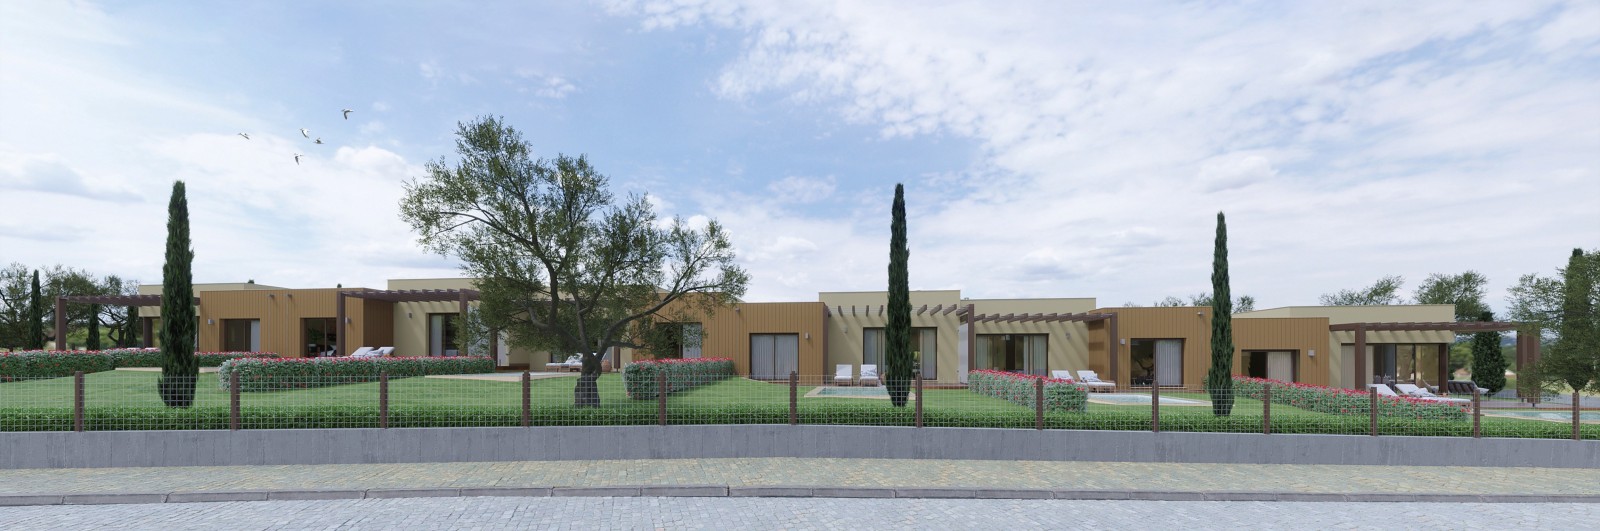 2 bedroom semi-detached villa with swimming pool for sale in Golf resort, Algarve_218840